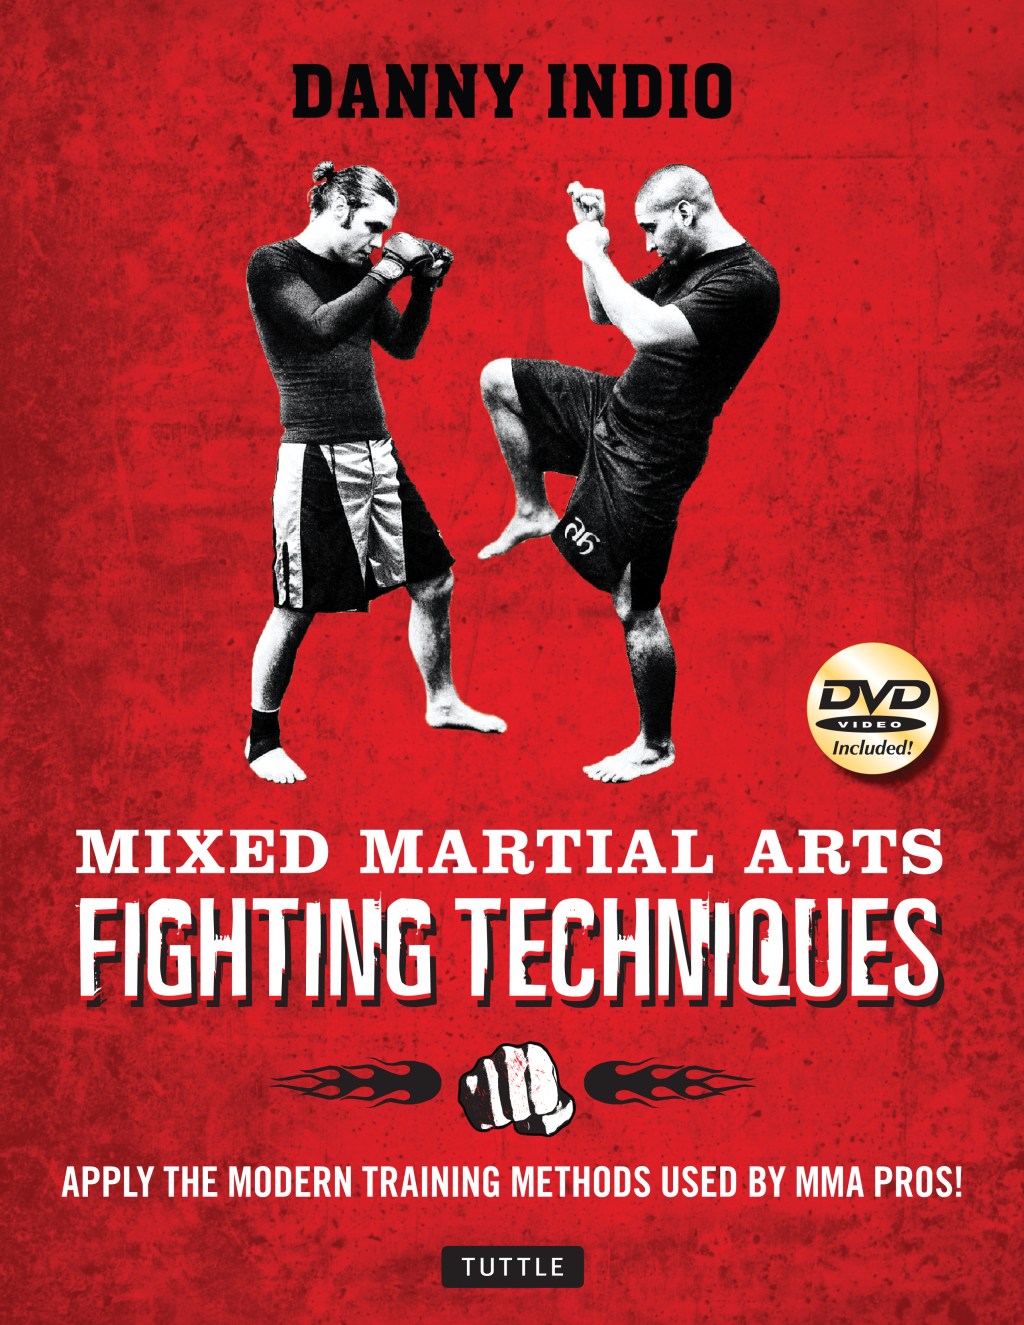 Mixed Martial Arts Fighting Techniques Videos